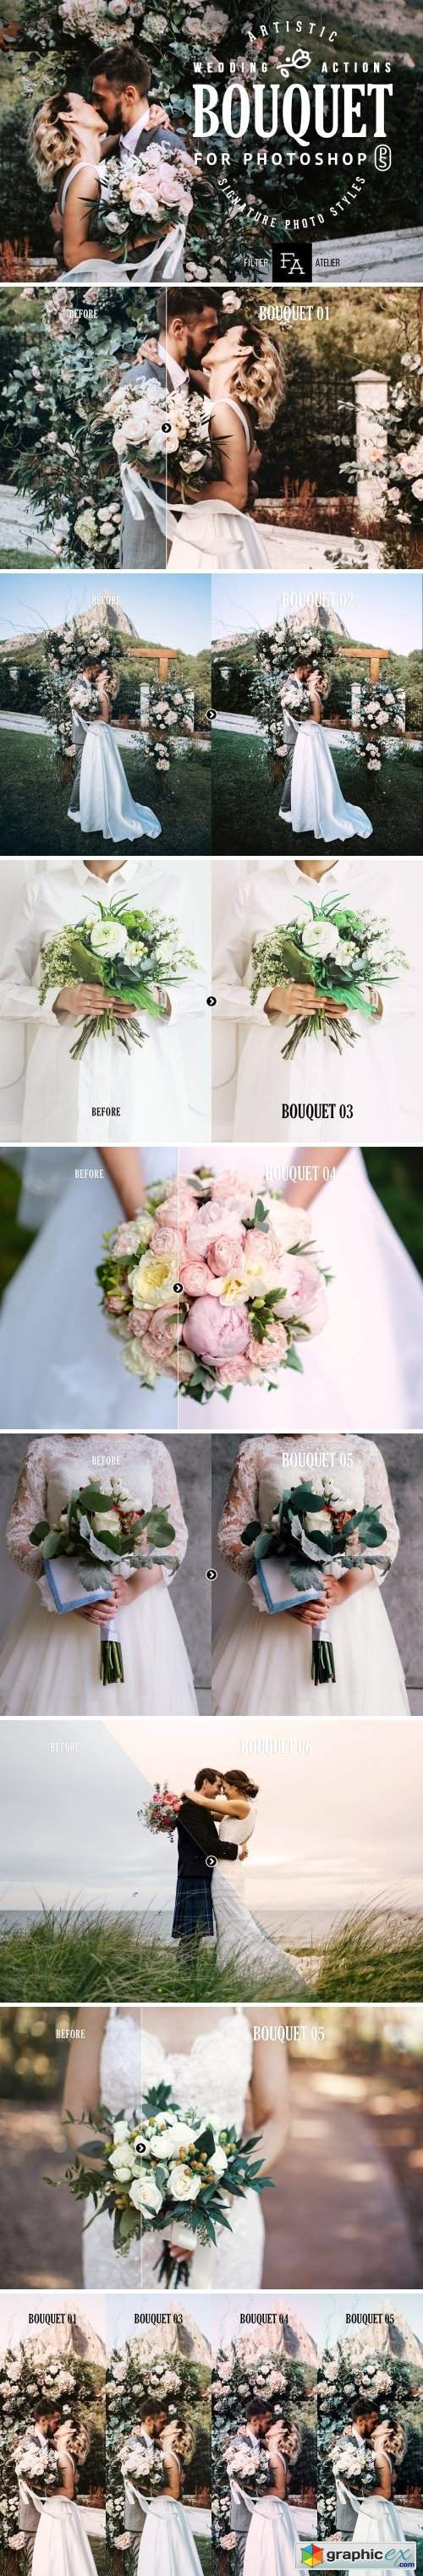 Bouquet Wedding Photoshop Actions 2170025